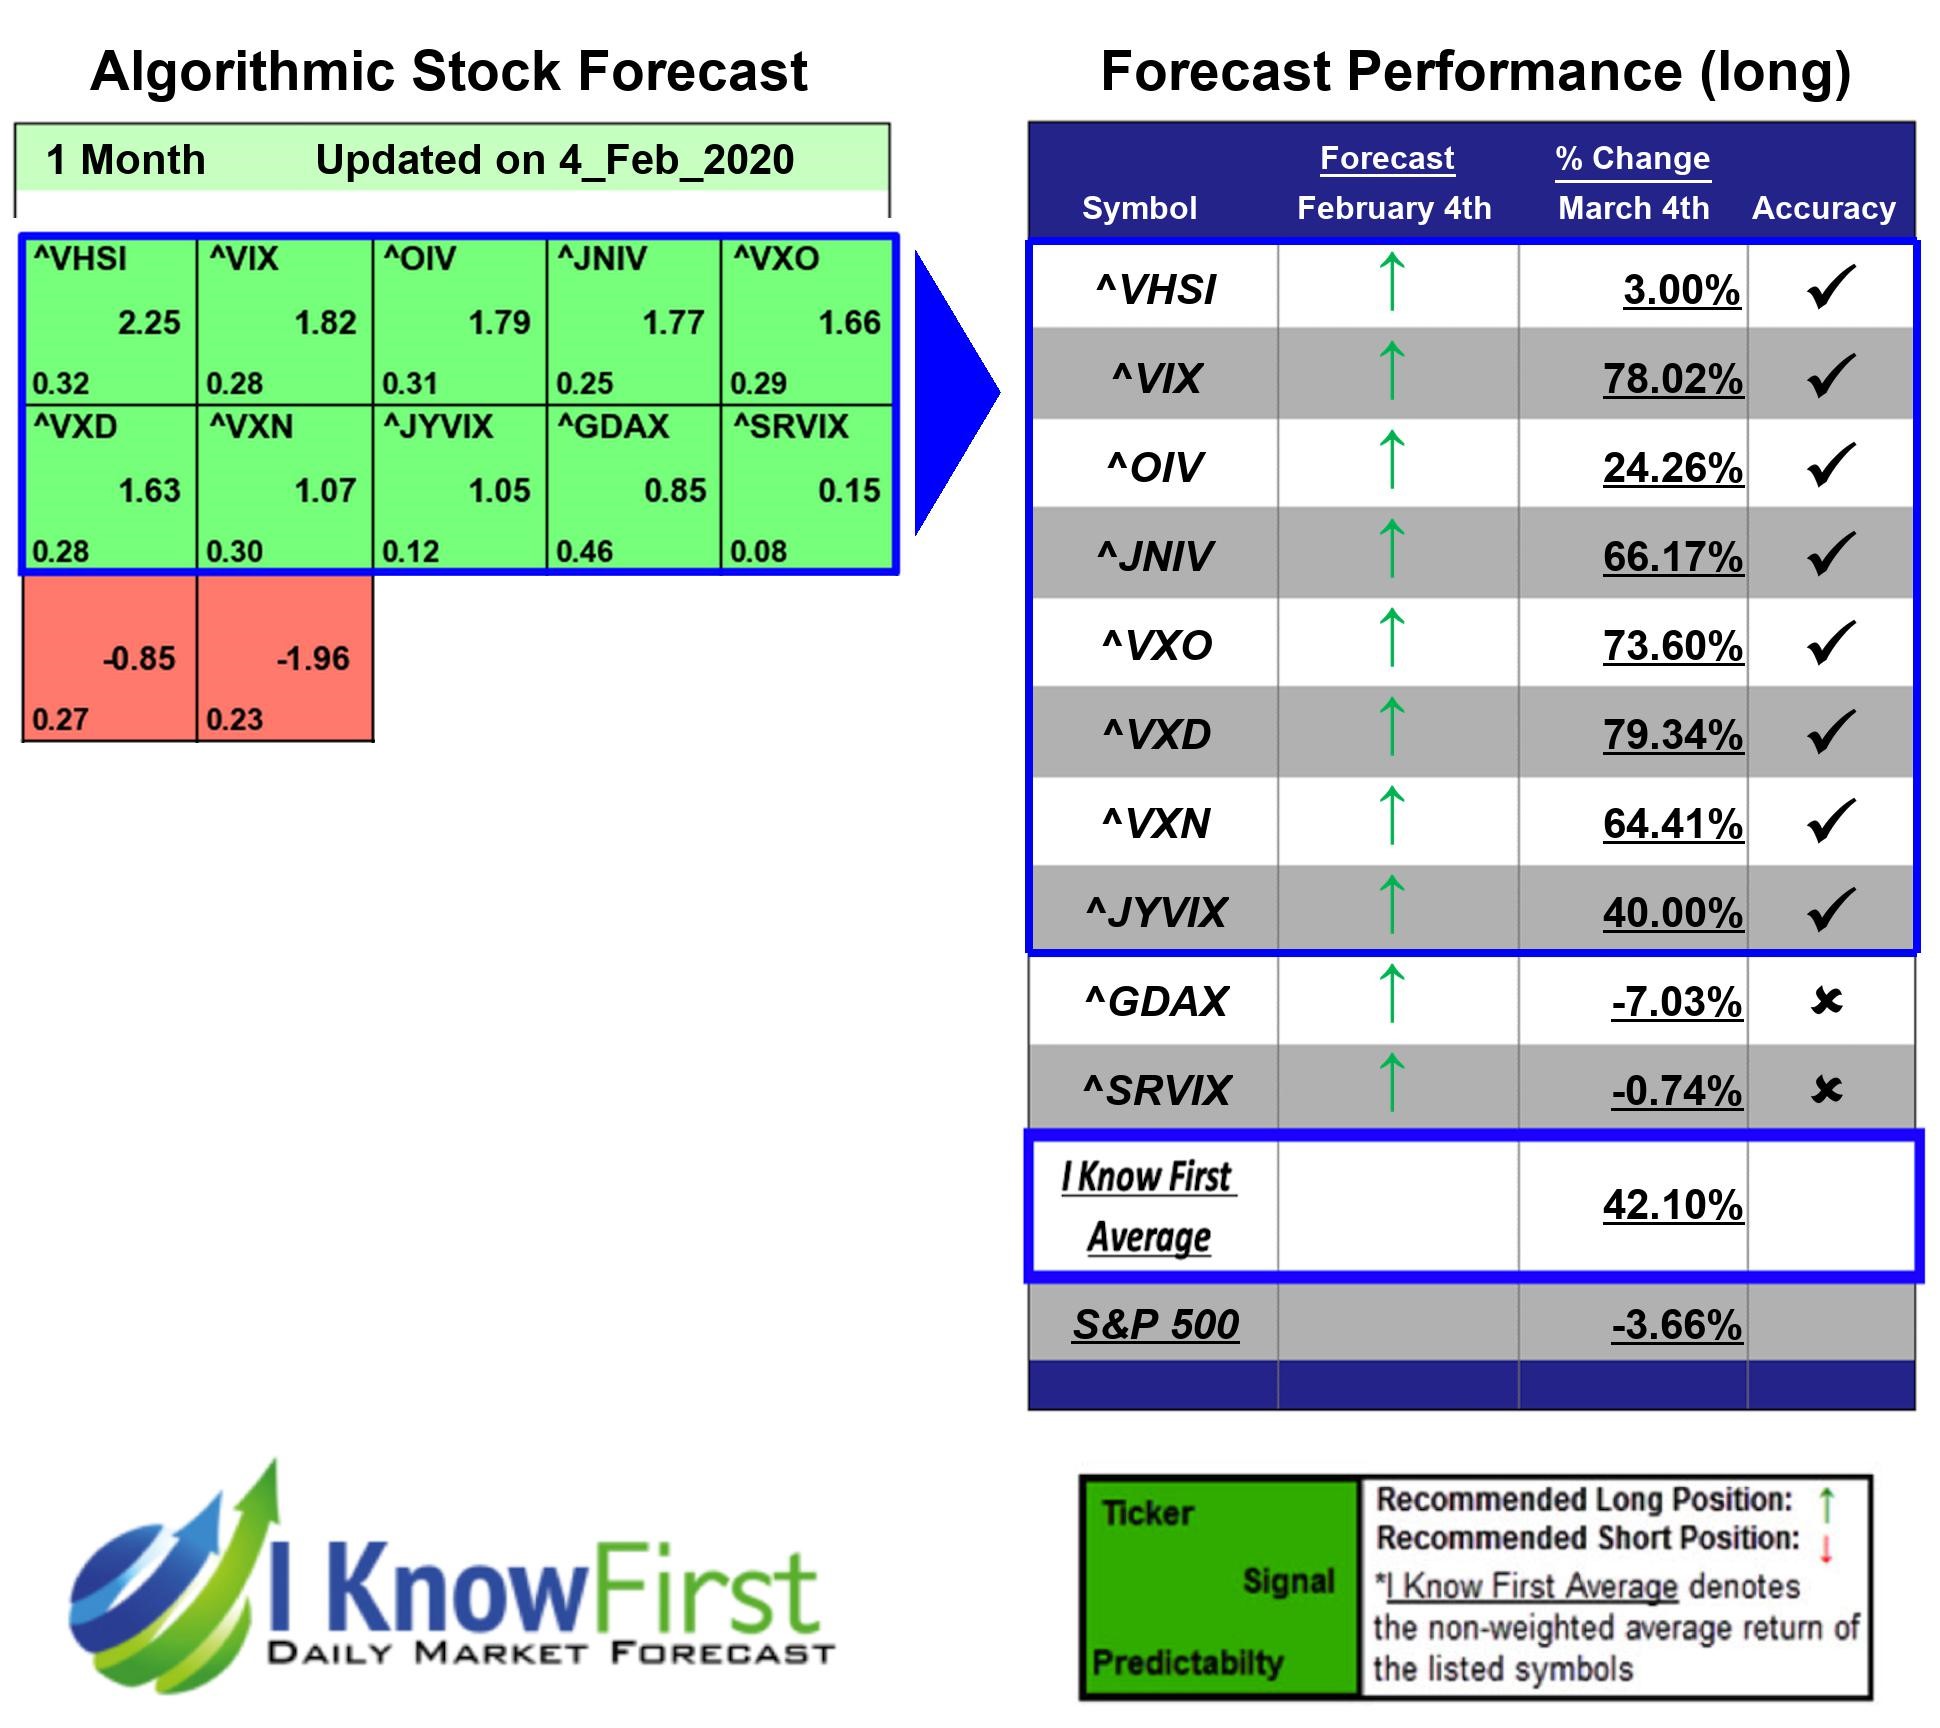 Volatility Forecasting